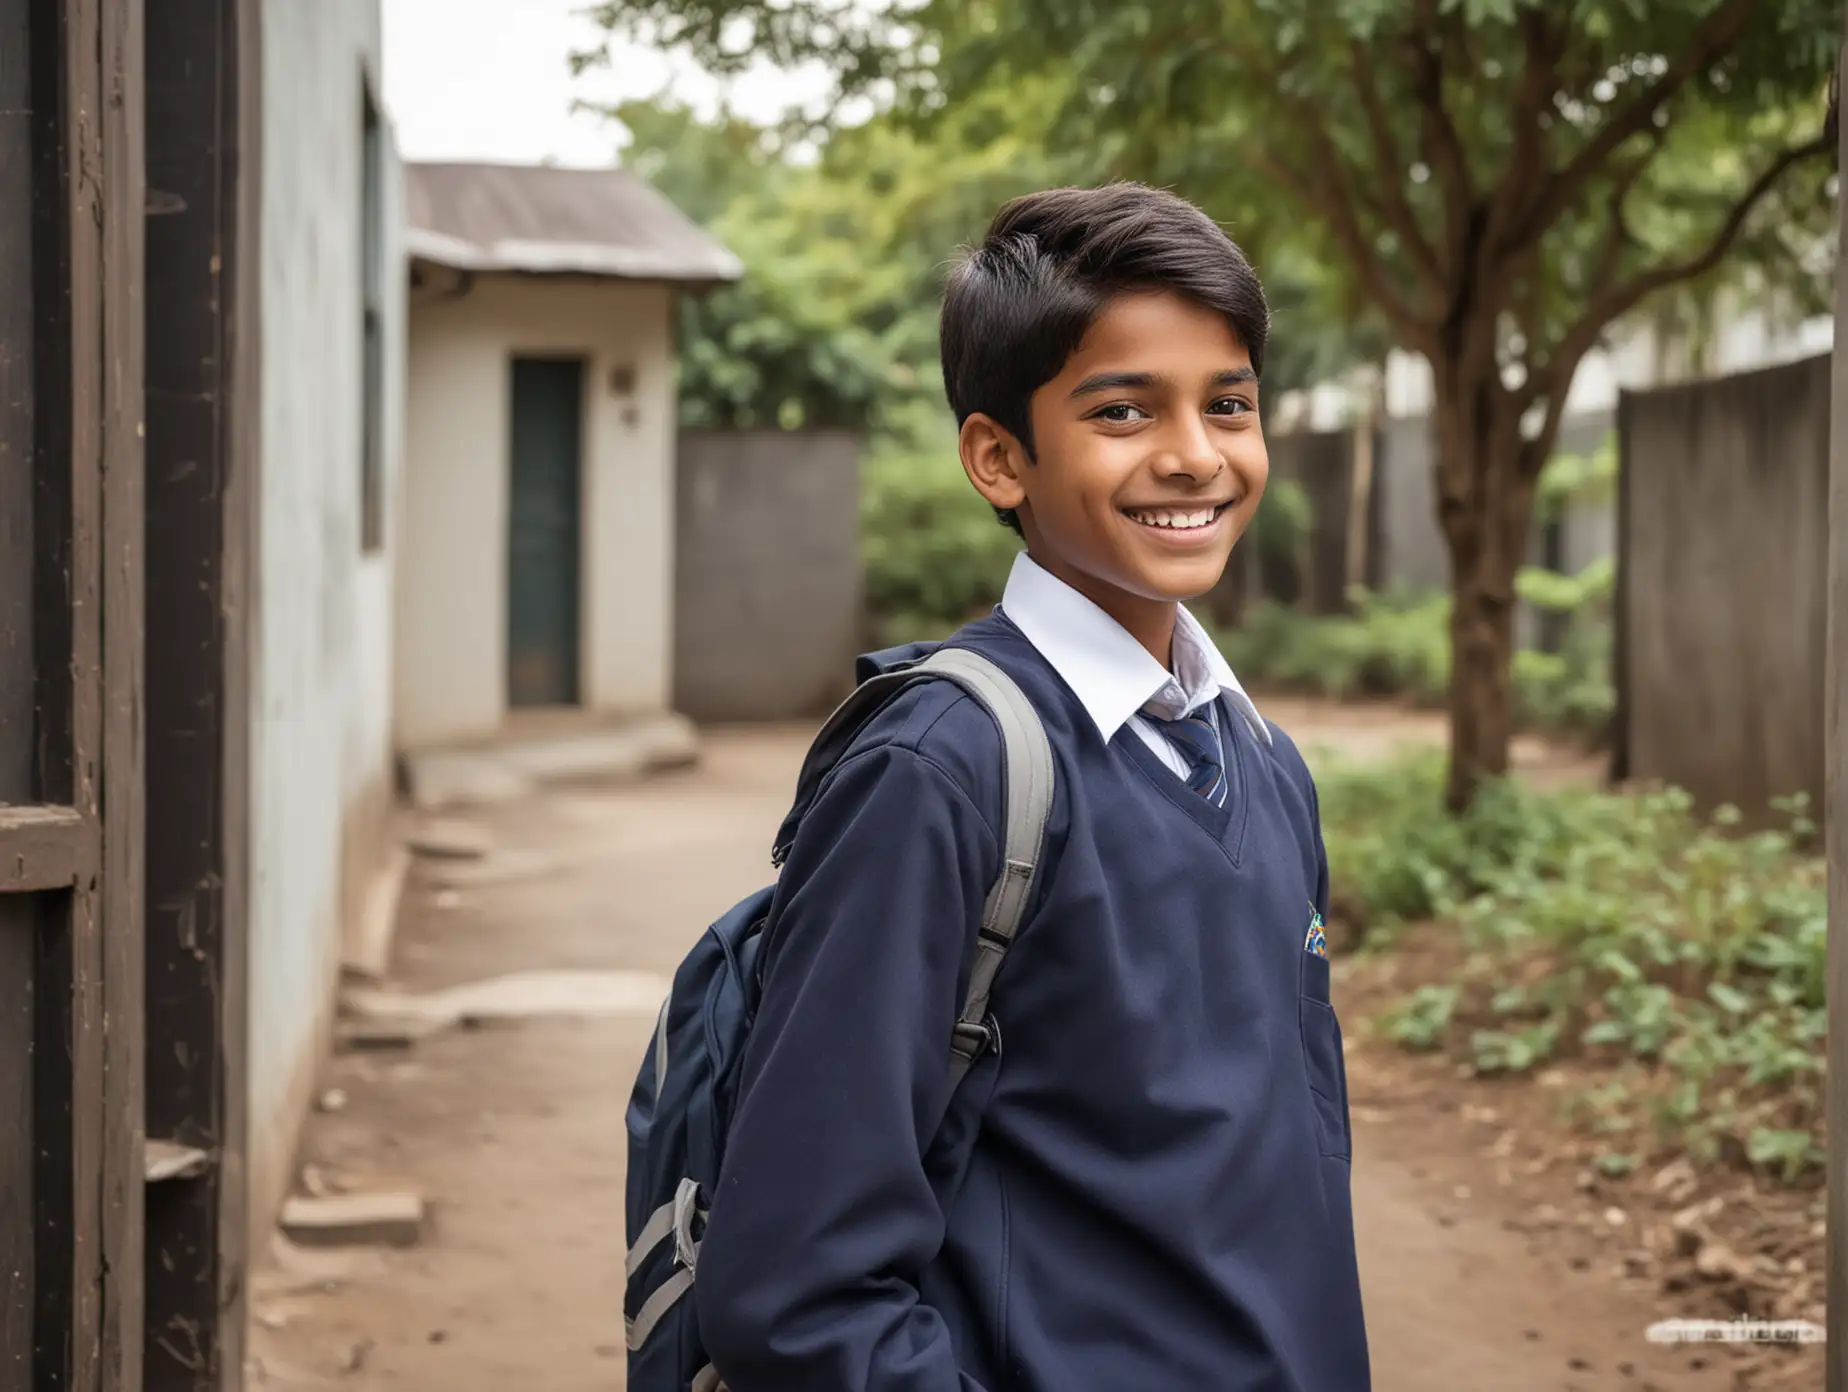 Confident-Grade-7-Indian-Boy-Smiling-in-School-Uniform-Outdoors